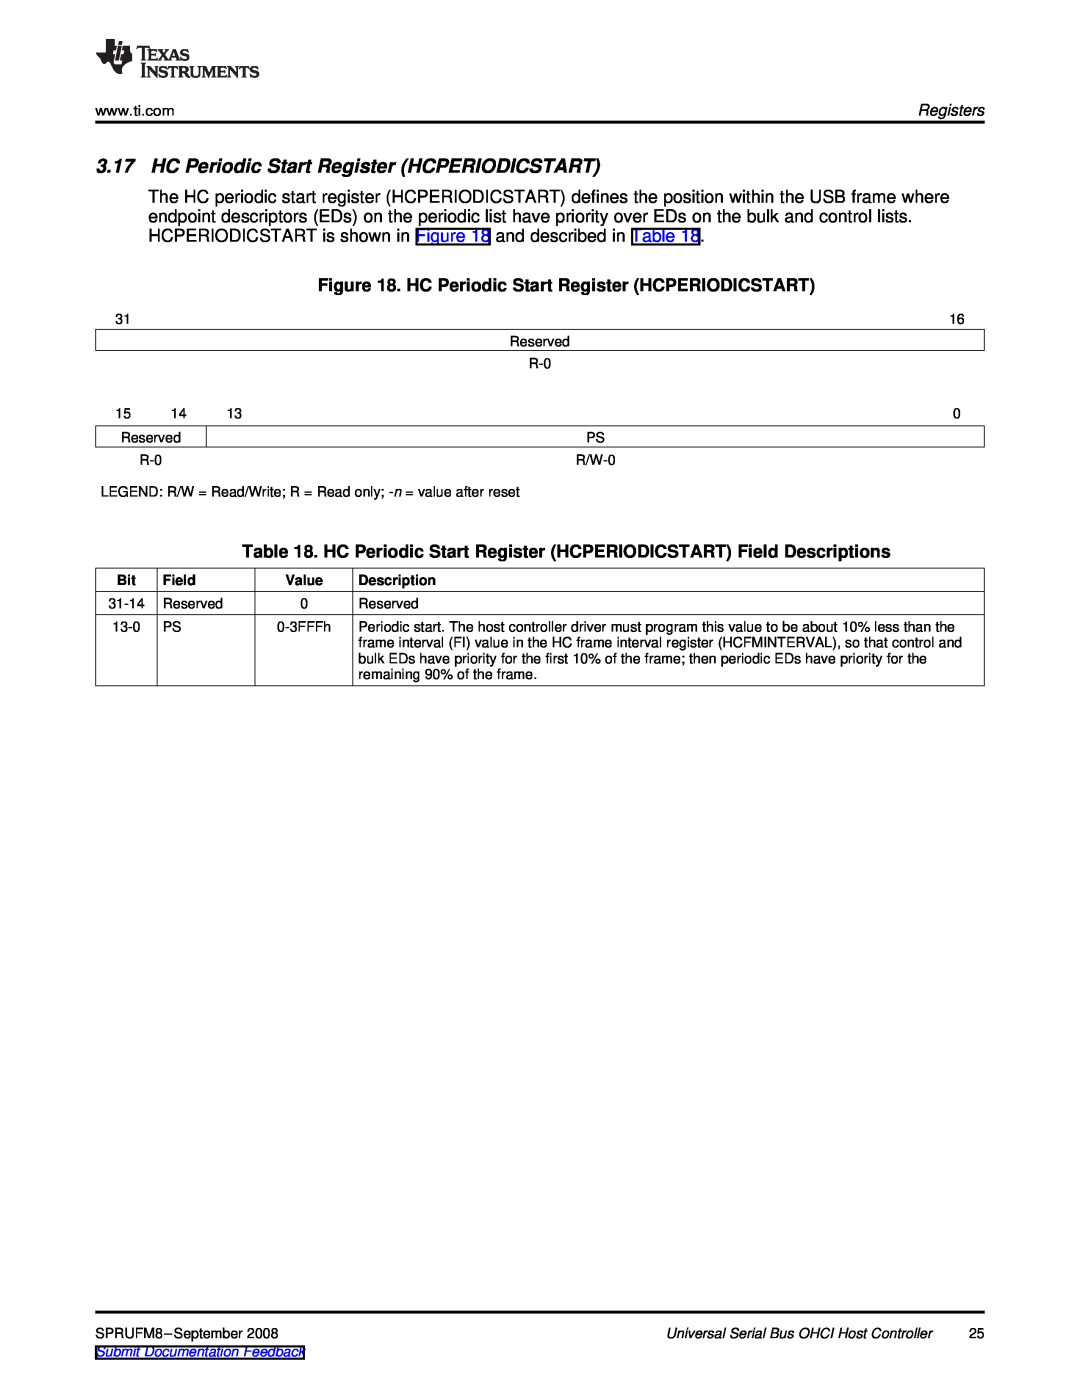 Texas Instruments TMS320C6747 DSP manual HC Periodic Start Register HCPERIODICSTART, Field, Value, Description 